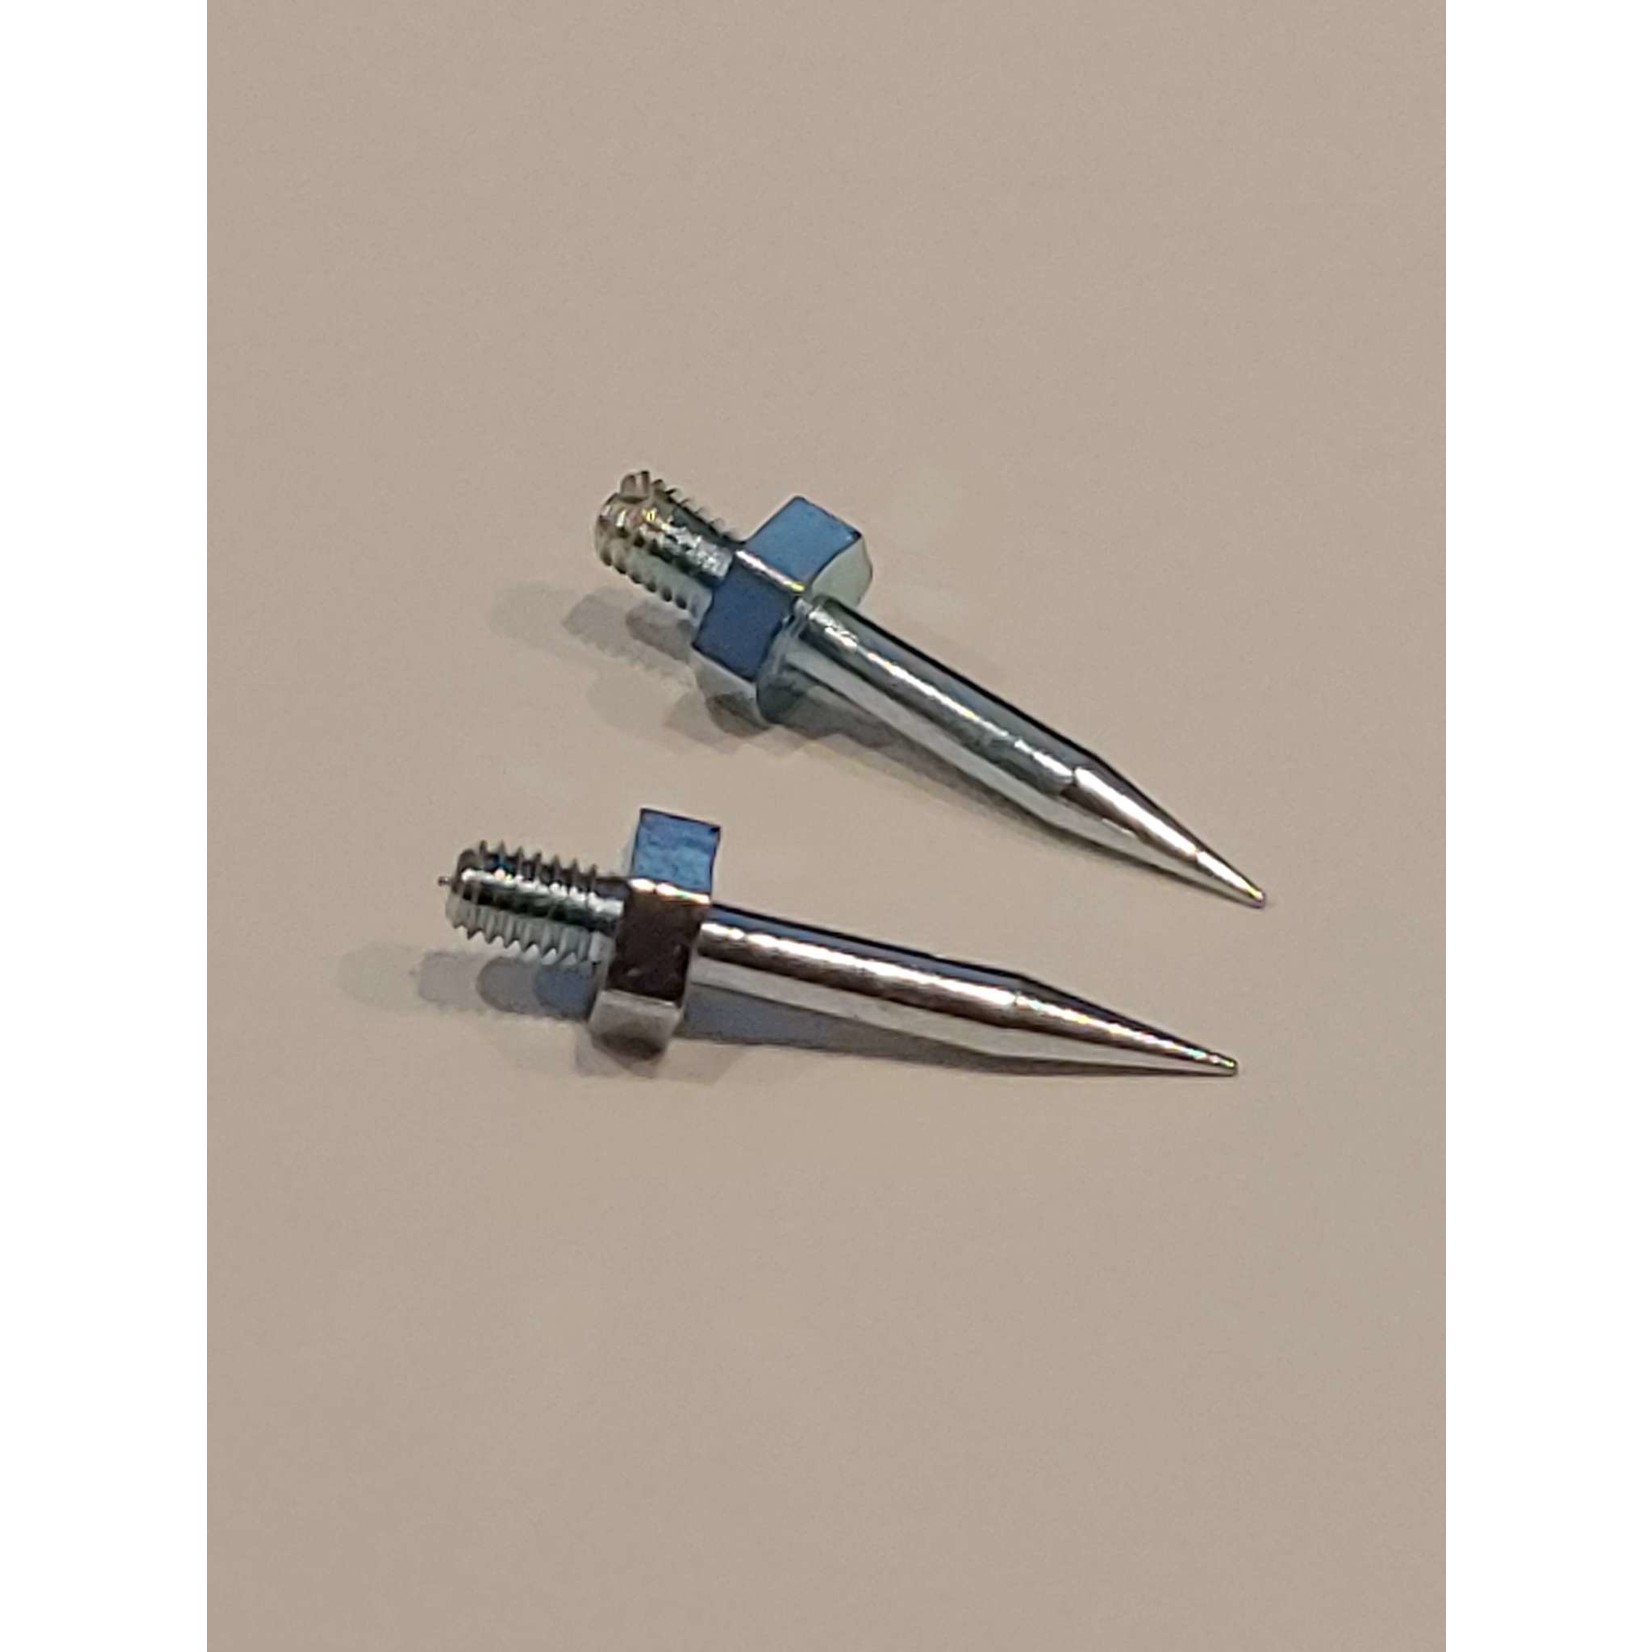 Protimeter Protimeter Replacement Probe Pins